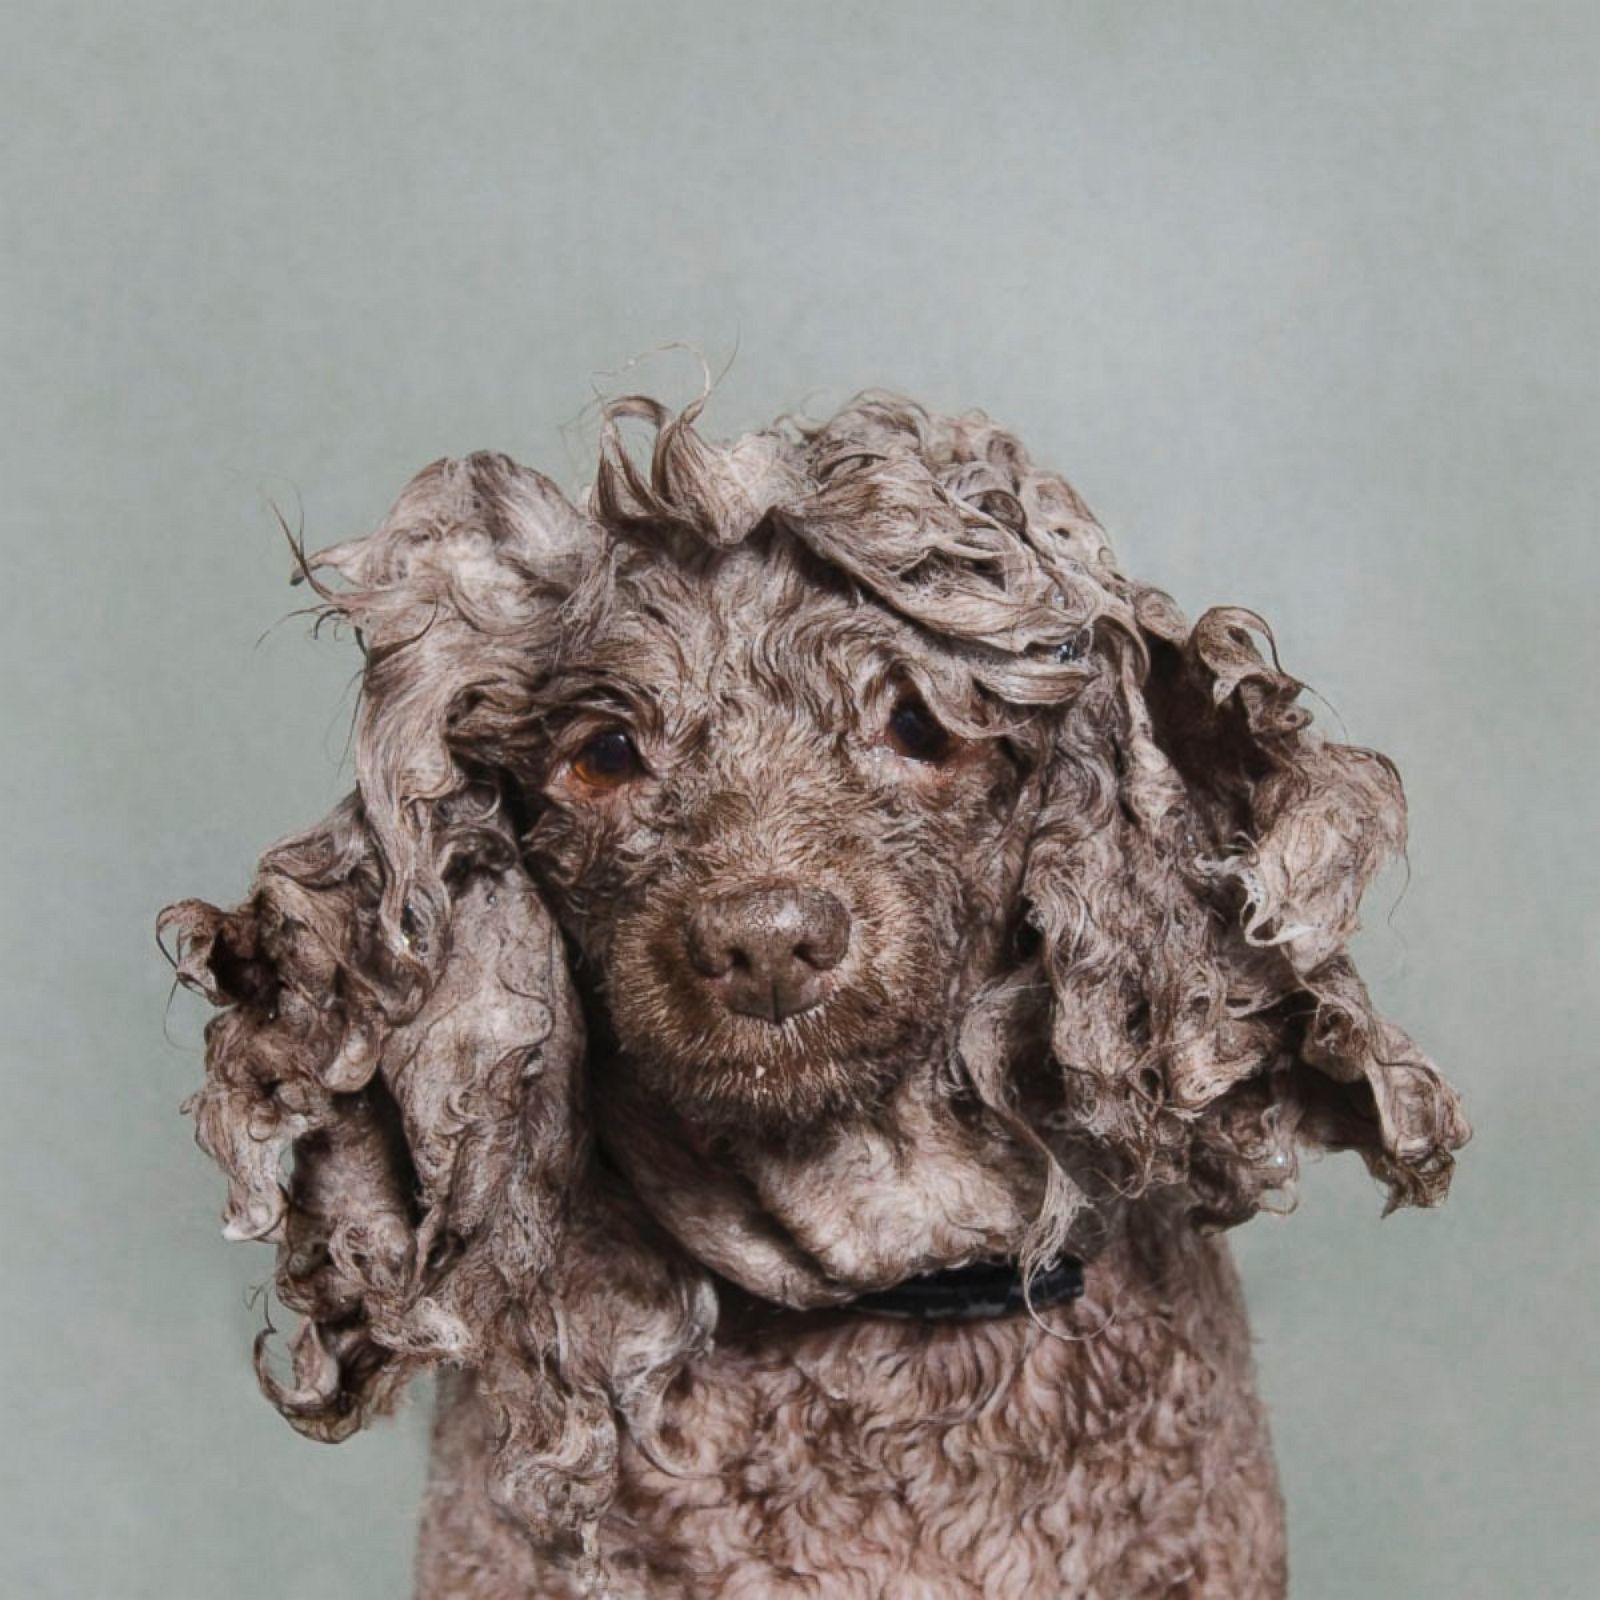 Wet Dog Portraits Photos | Image #1 - ABC News